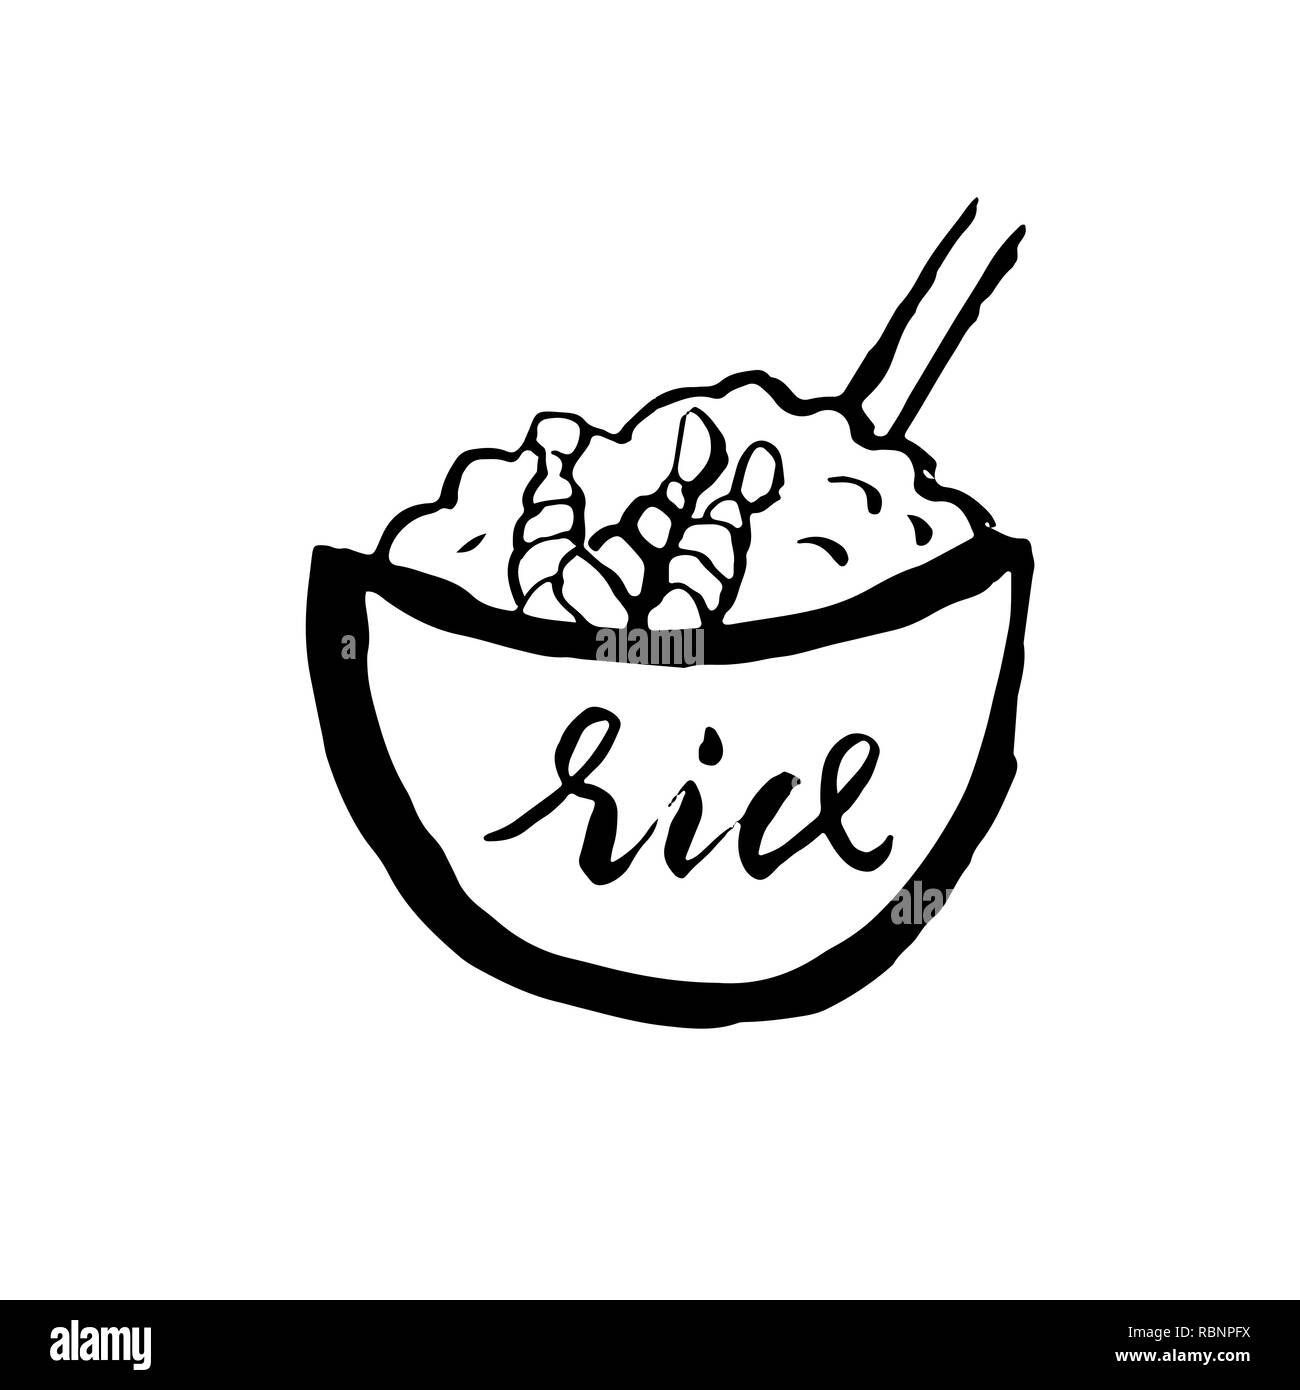 Rice with prawn icon. Grunge ink brush vector illustration. Food flat illustration. Stock Vector